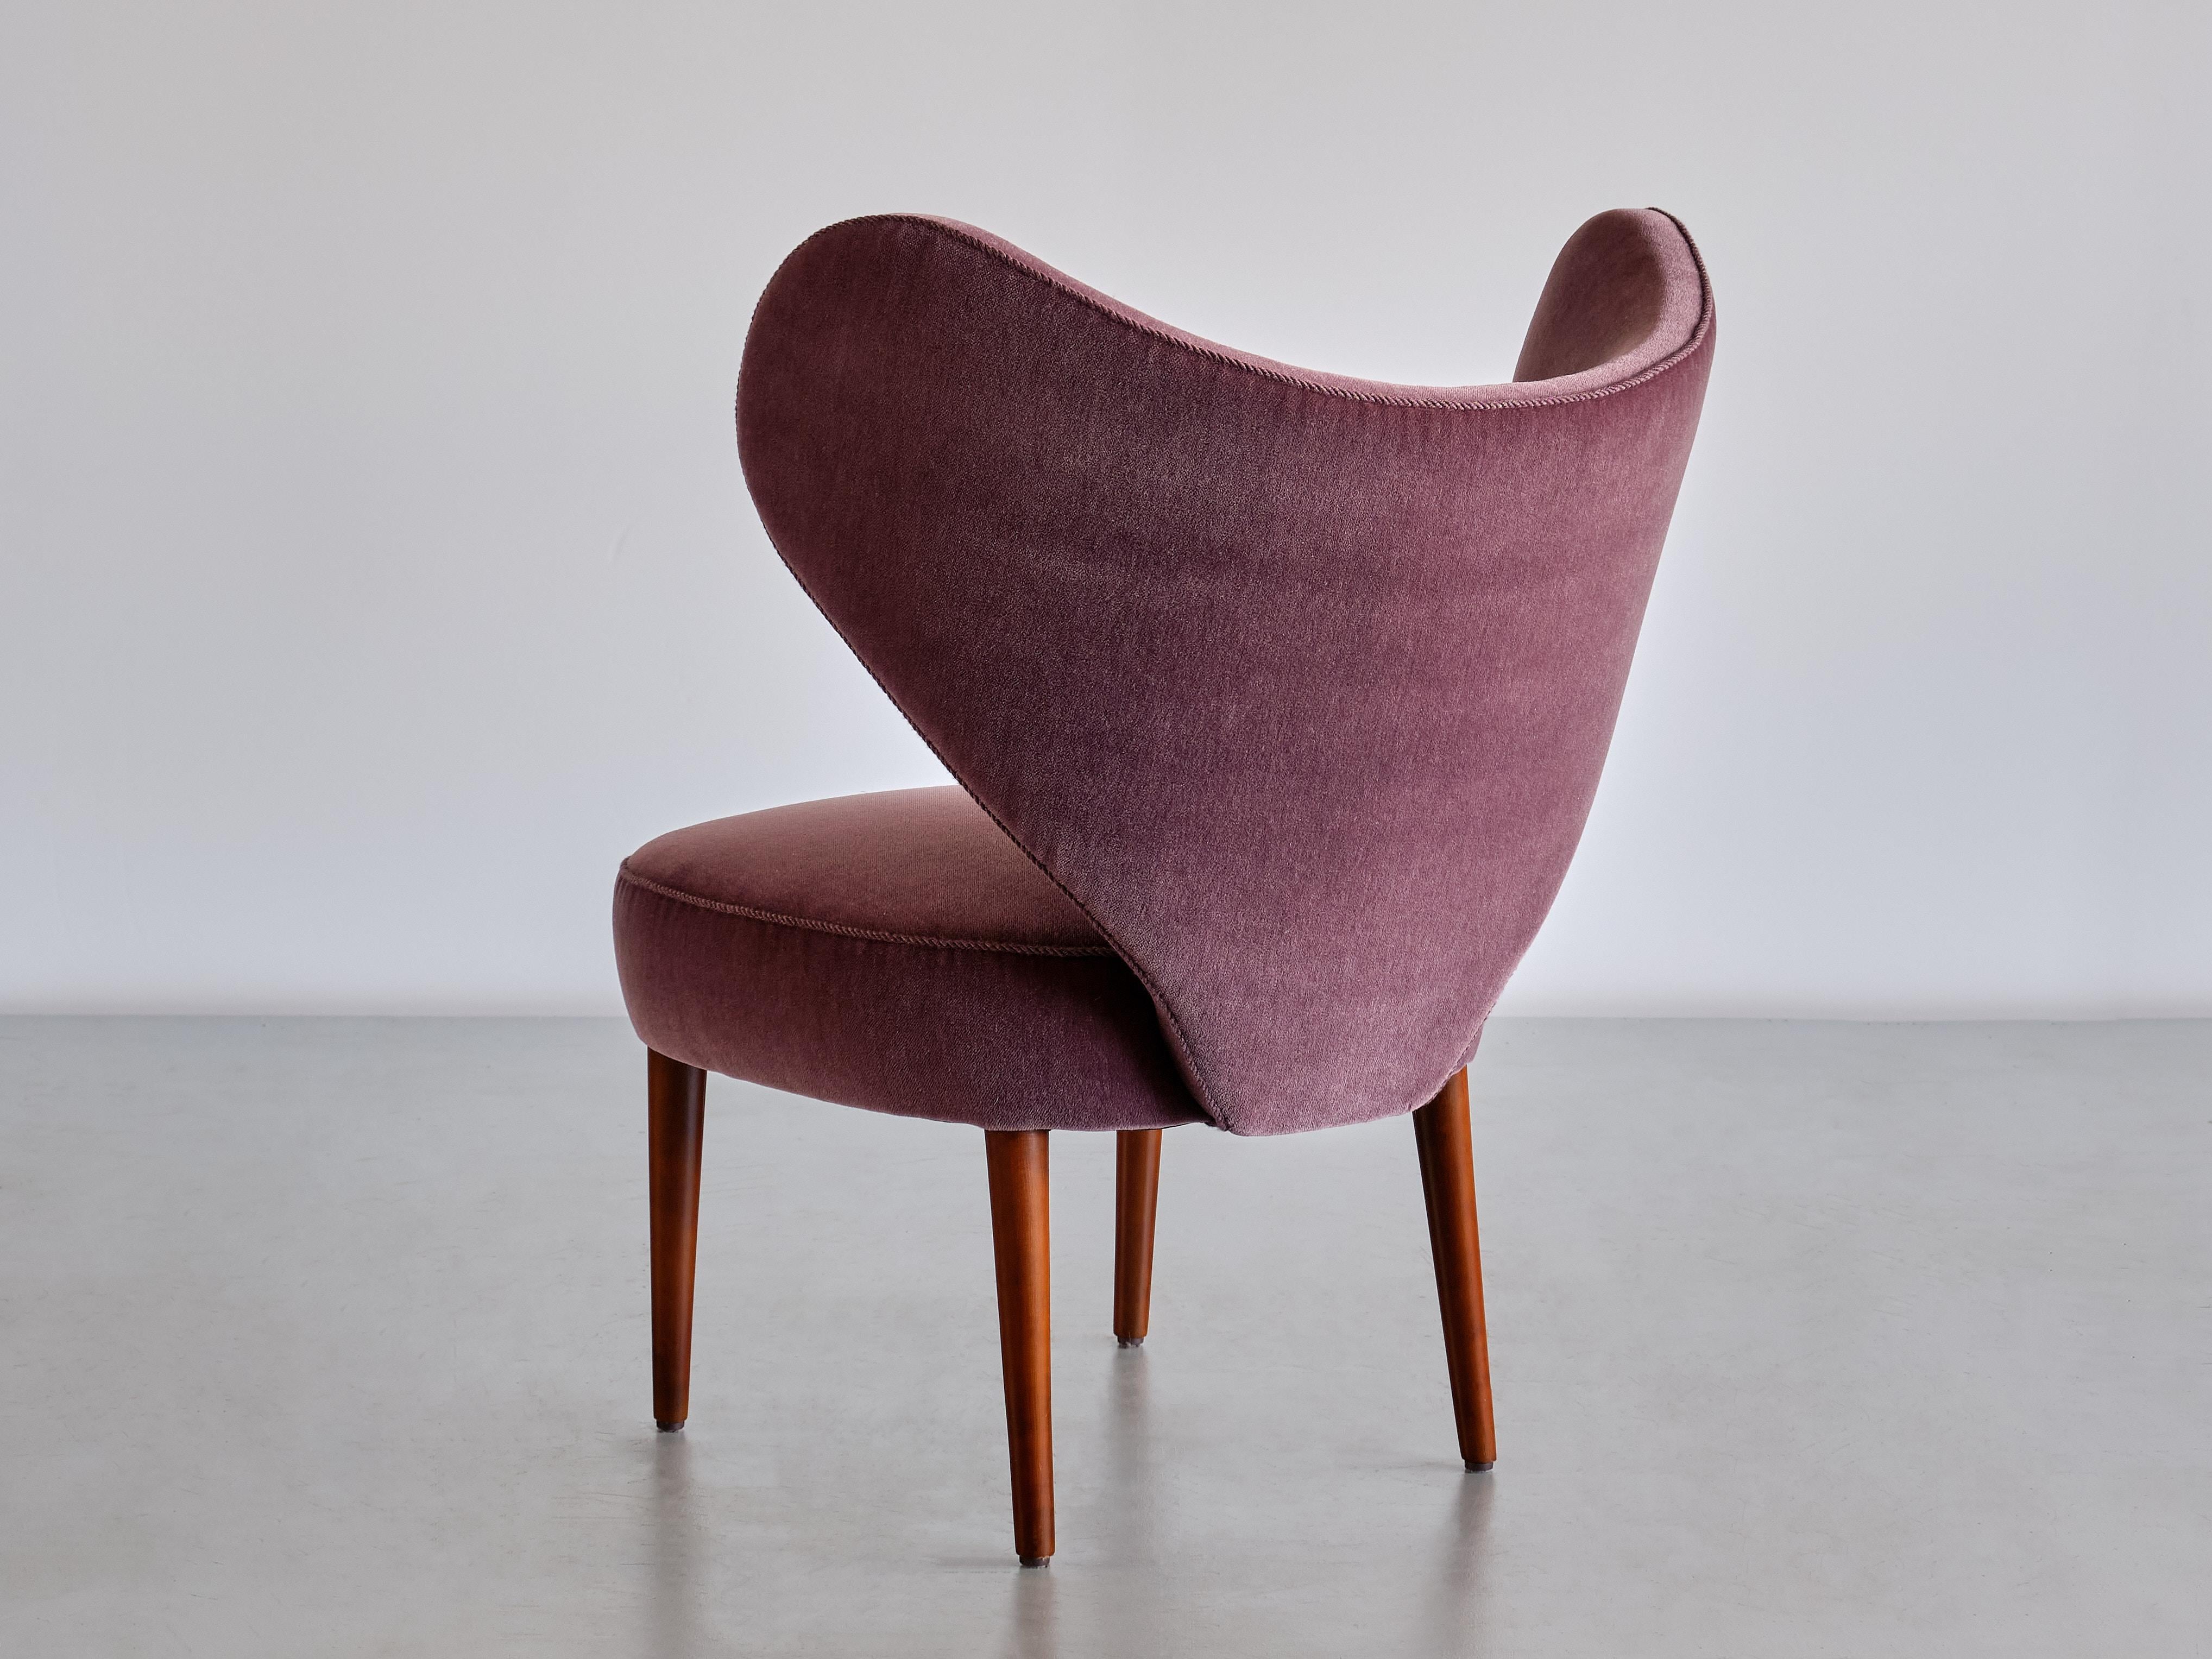 Exceptional 'Heart' Chair in Purple Mohair, Brøndbyøster Møbel, Denmark, 1953 For Sale 4